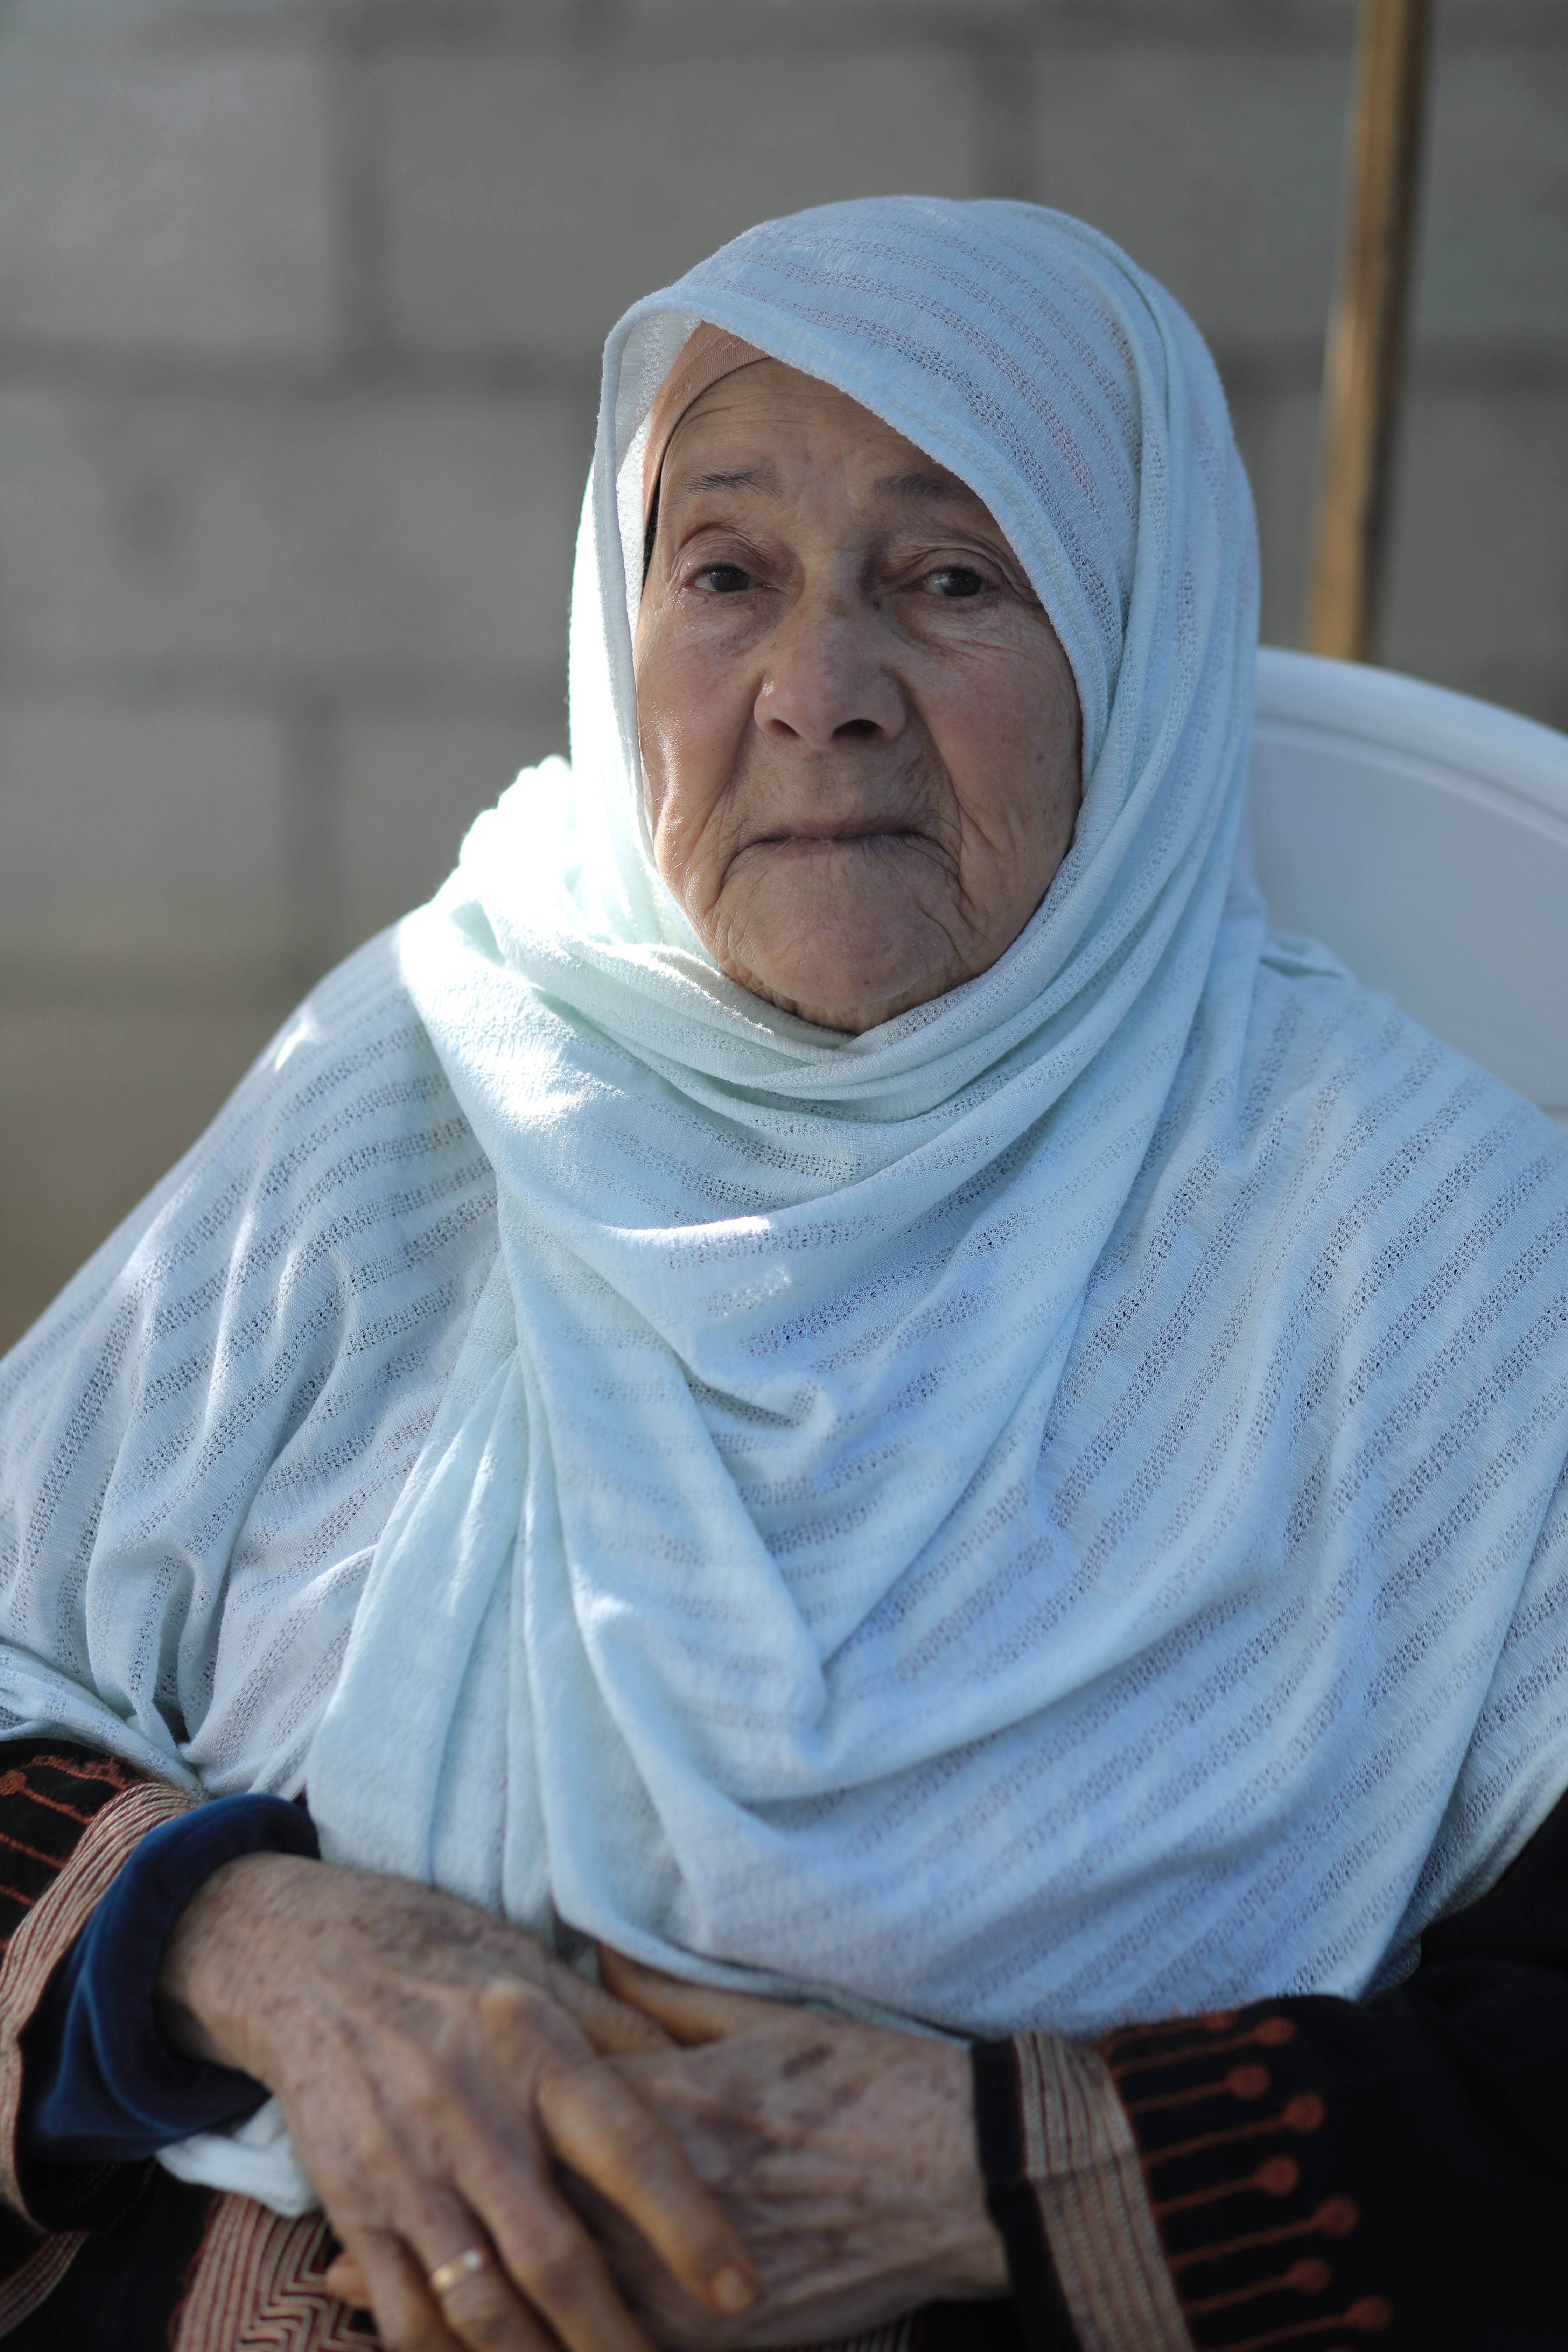 Dalal Nassar, a 84-year-old Palestinian refugee elderly woman